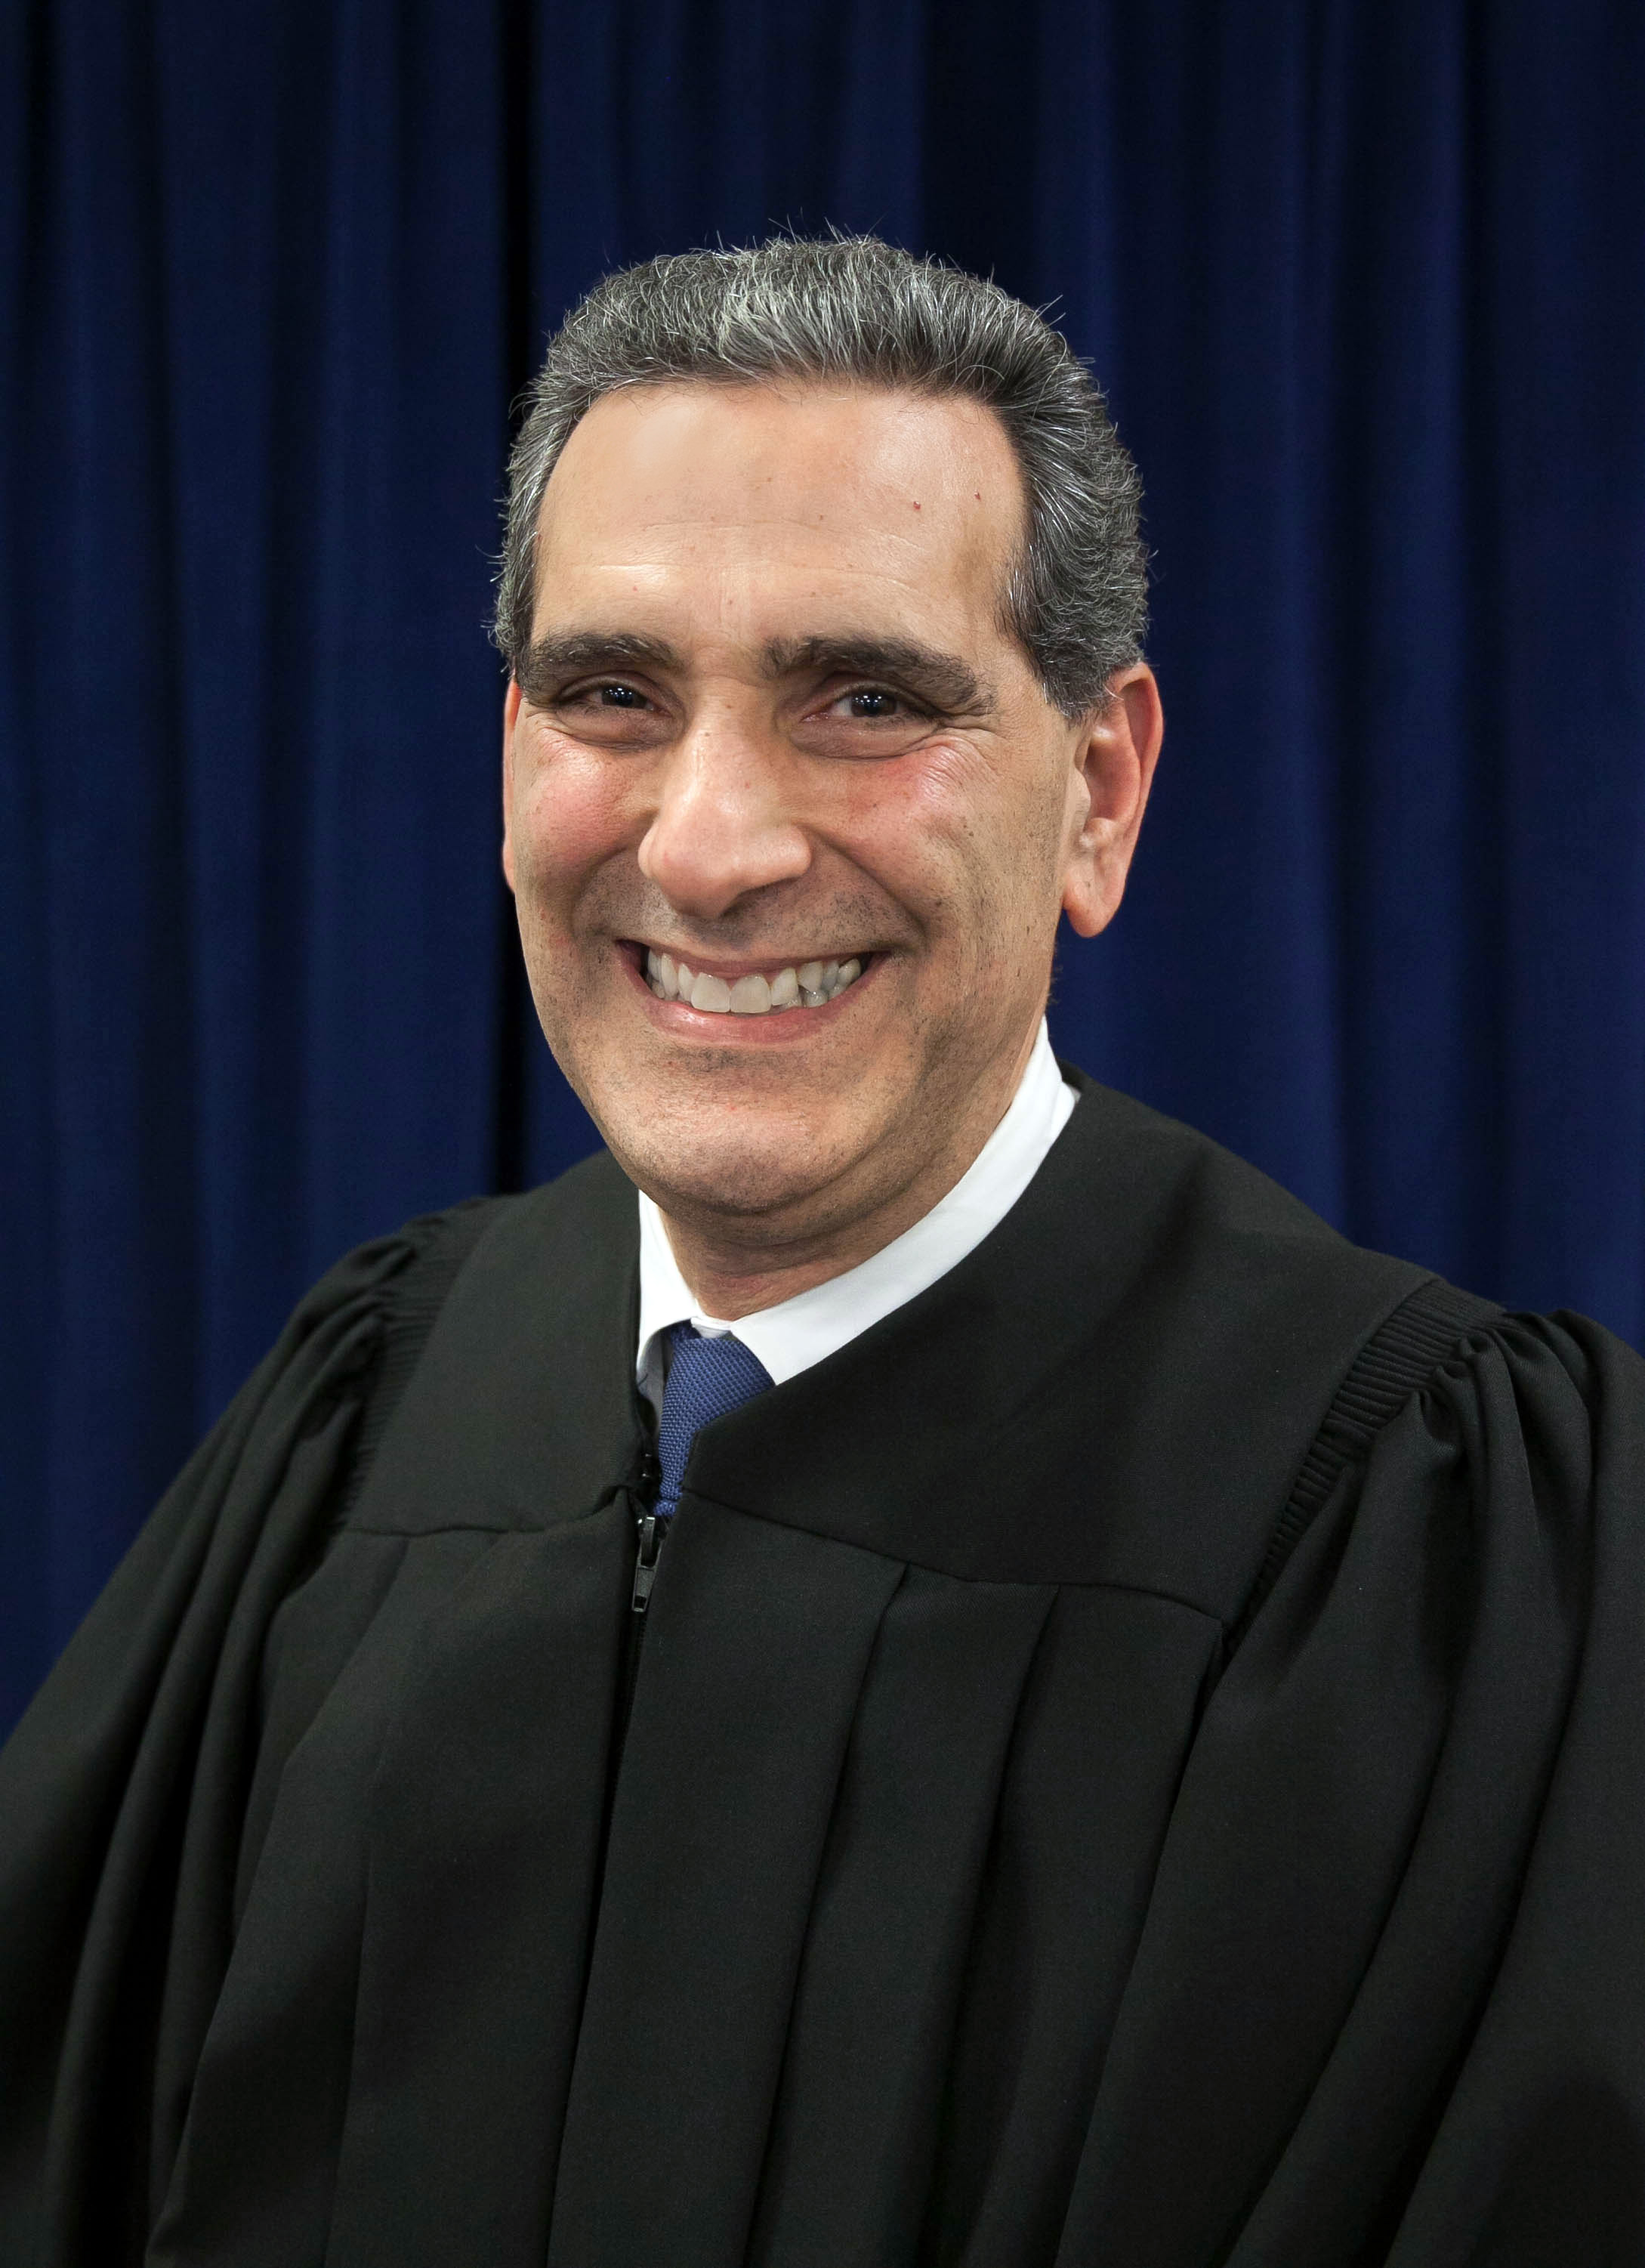 photo of the judge